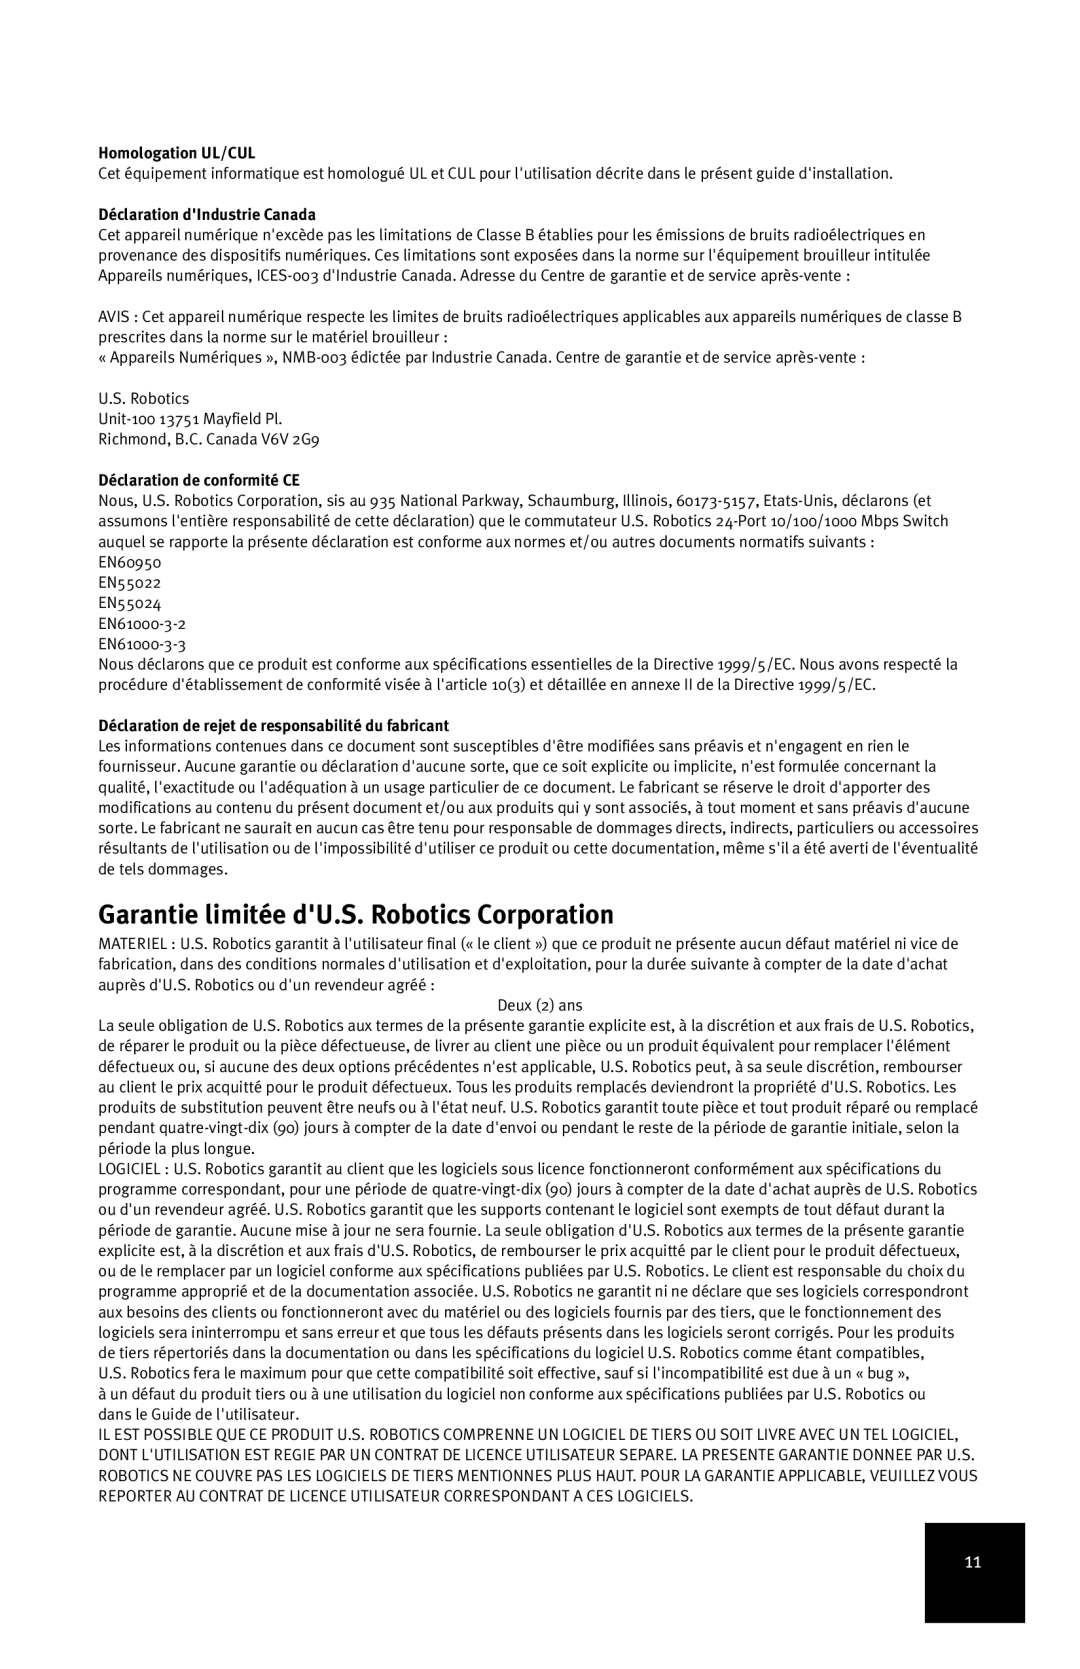 USRobotics 7931 manual Garantie limitée dU.S. Robotics Corporation, Homologation UL/CUL, Déclaration dIndustrie Canada 